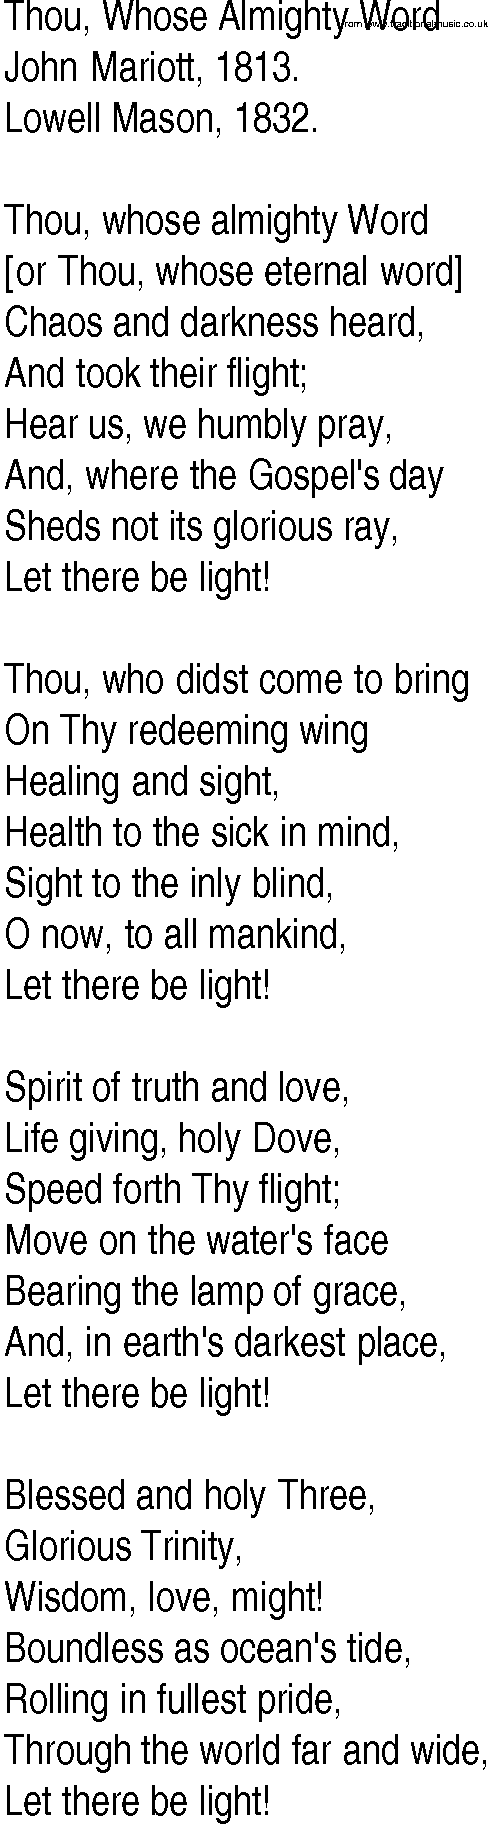 Hymn and Gospel Song: Thou, Whose Almighty Word by John Mariott lyrics